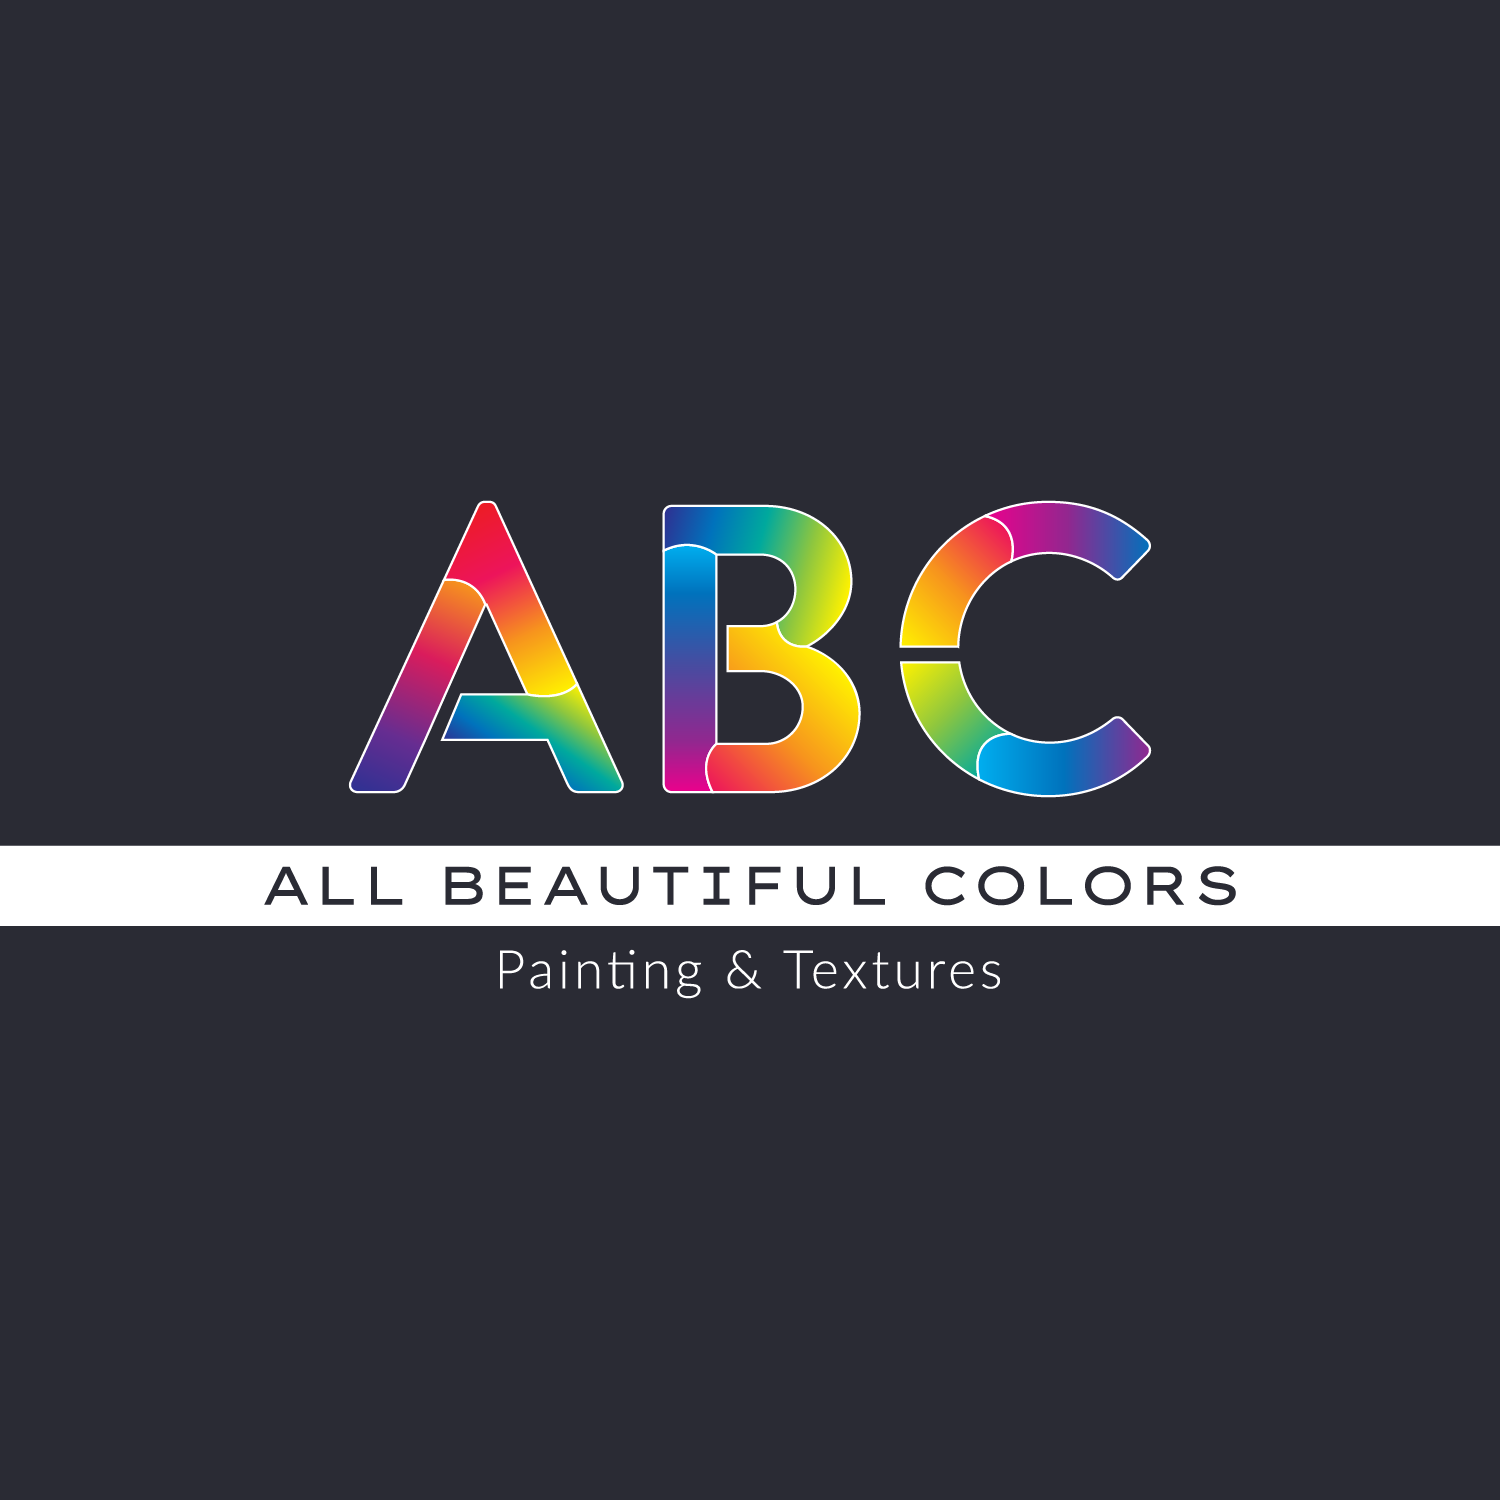 ABC Painting & Textures RGB Logo Design_Dark Background C=76 M=70 Y=56 K=60.png